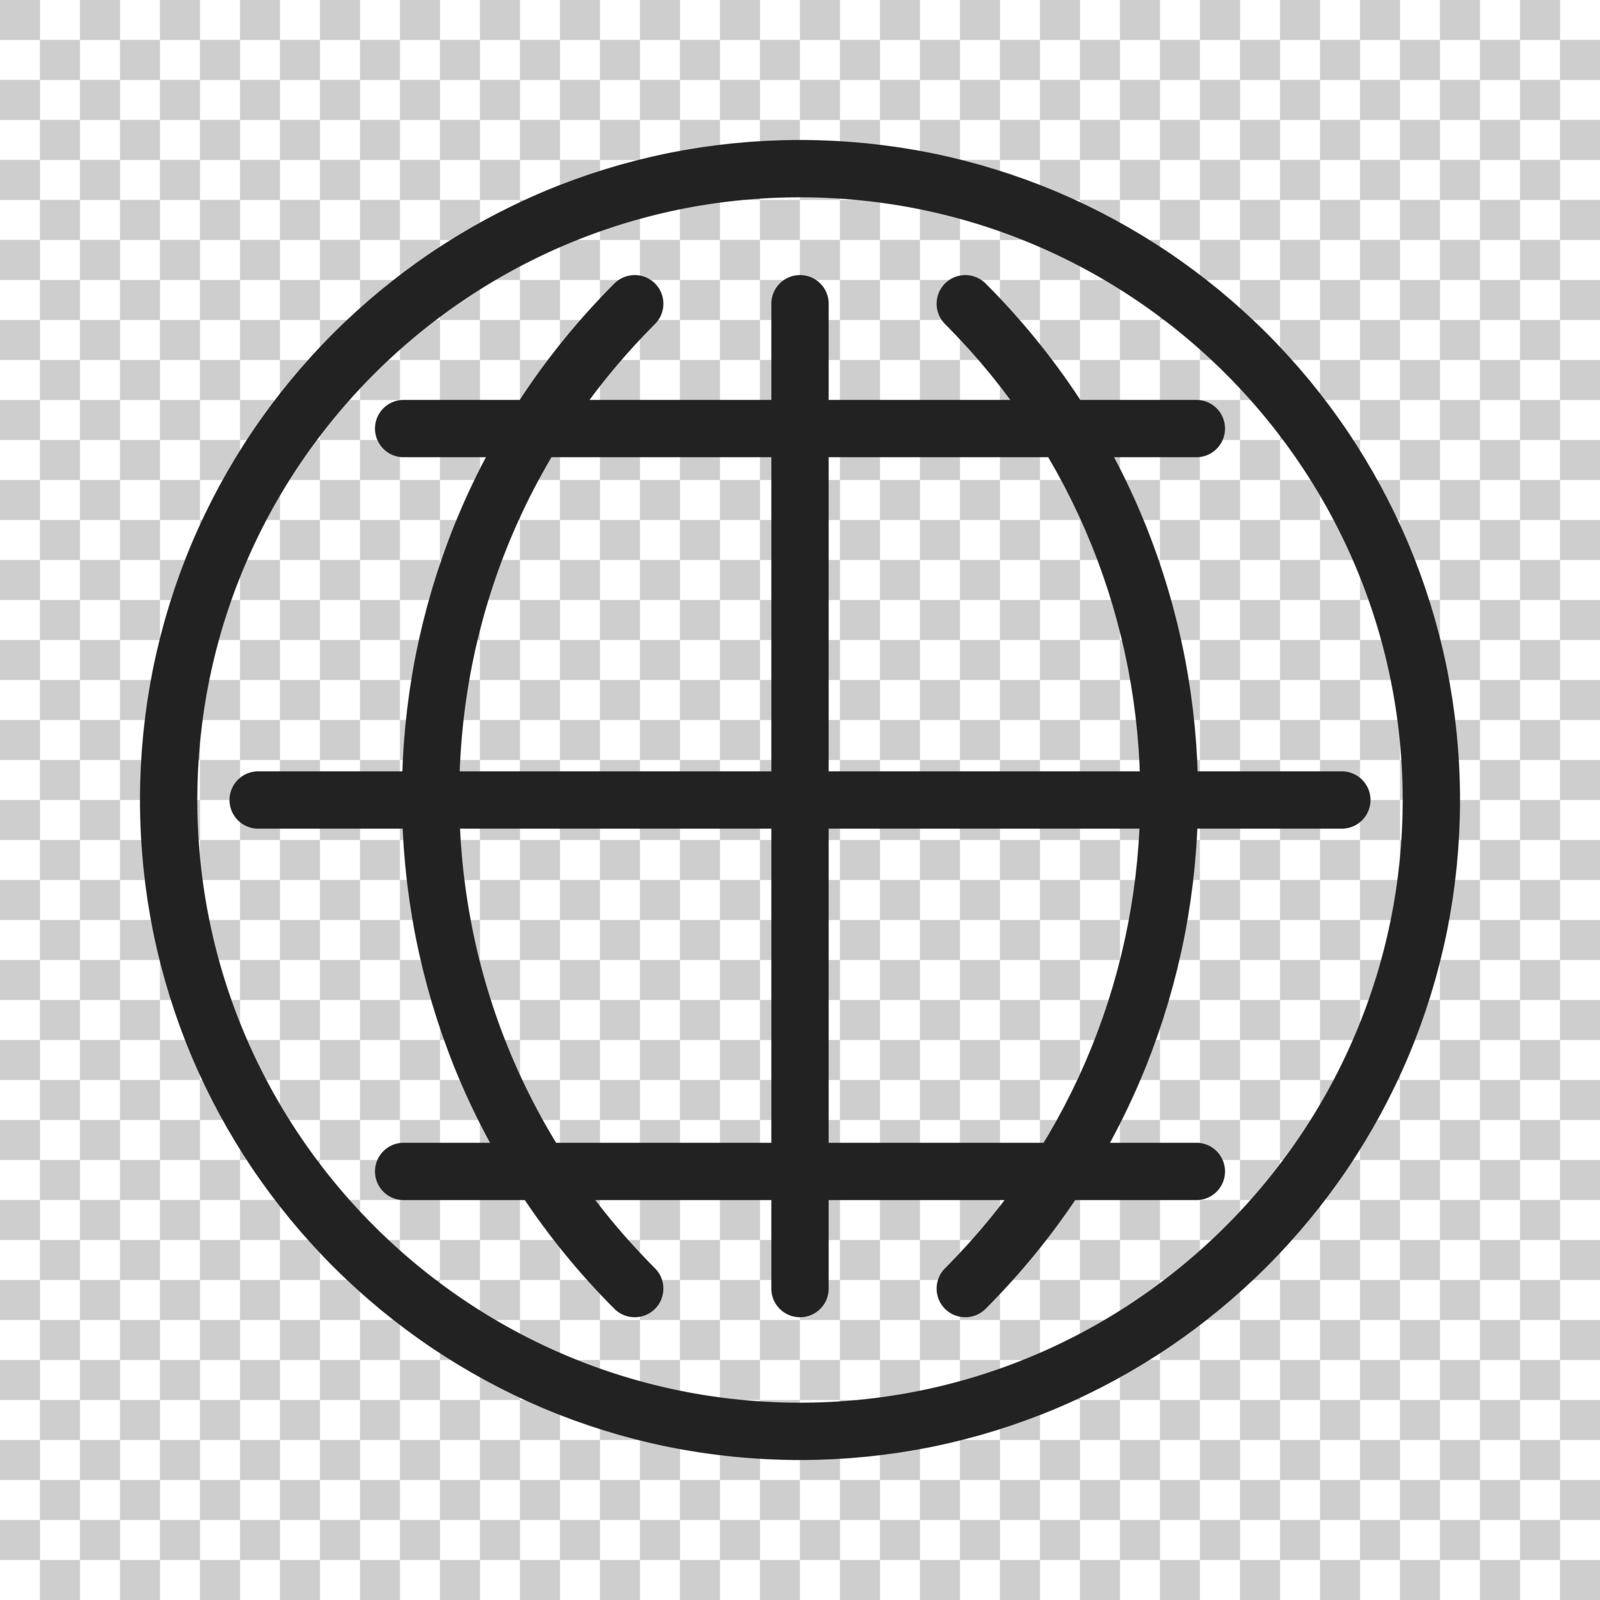 Choose or change language icon. Vector illustration on isolated transparent background. Business concept globe world communication pictogram.